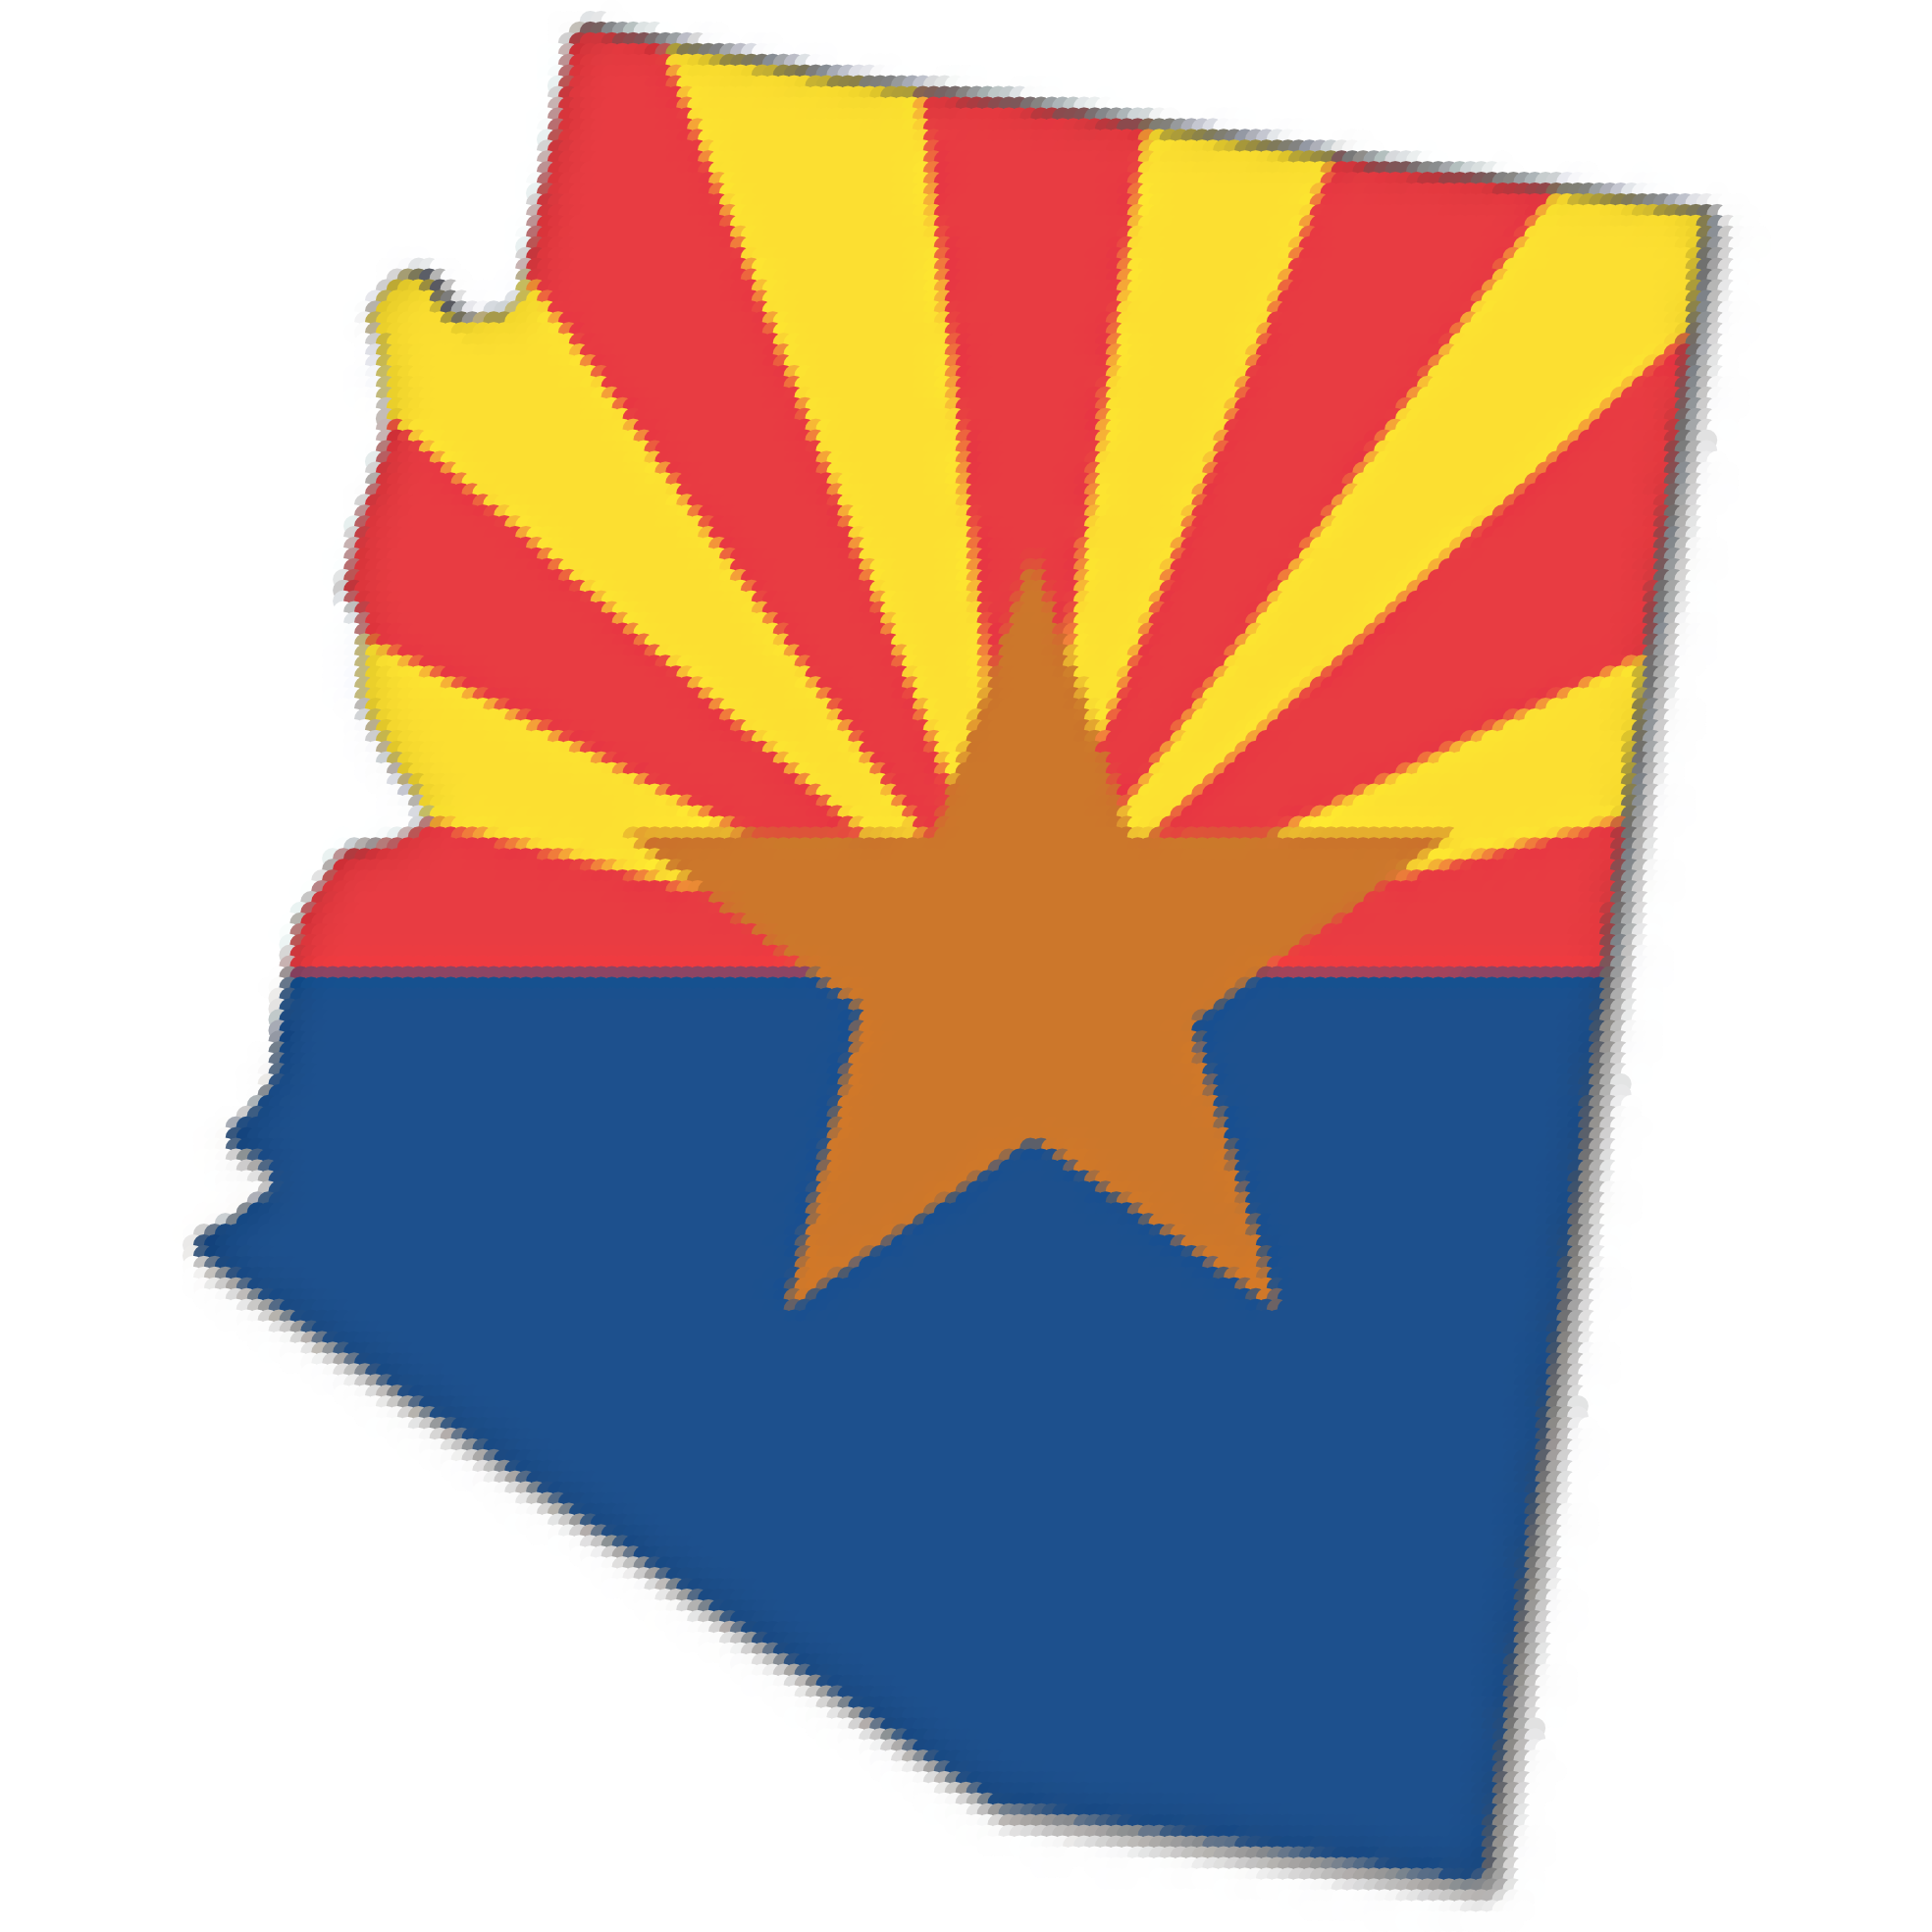 Arizona Flag Vector - ClipArt Best